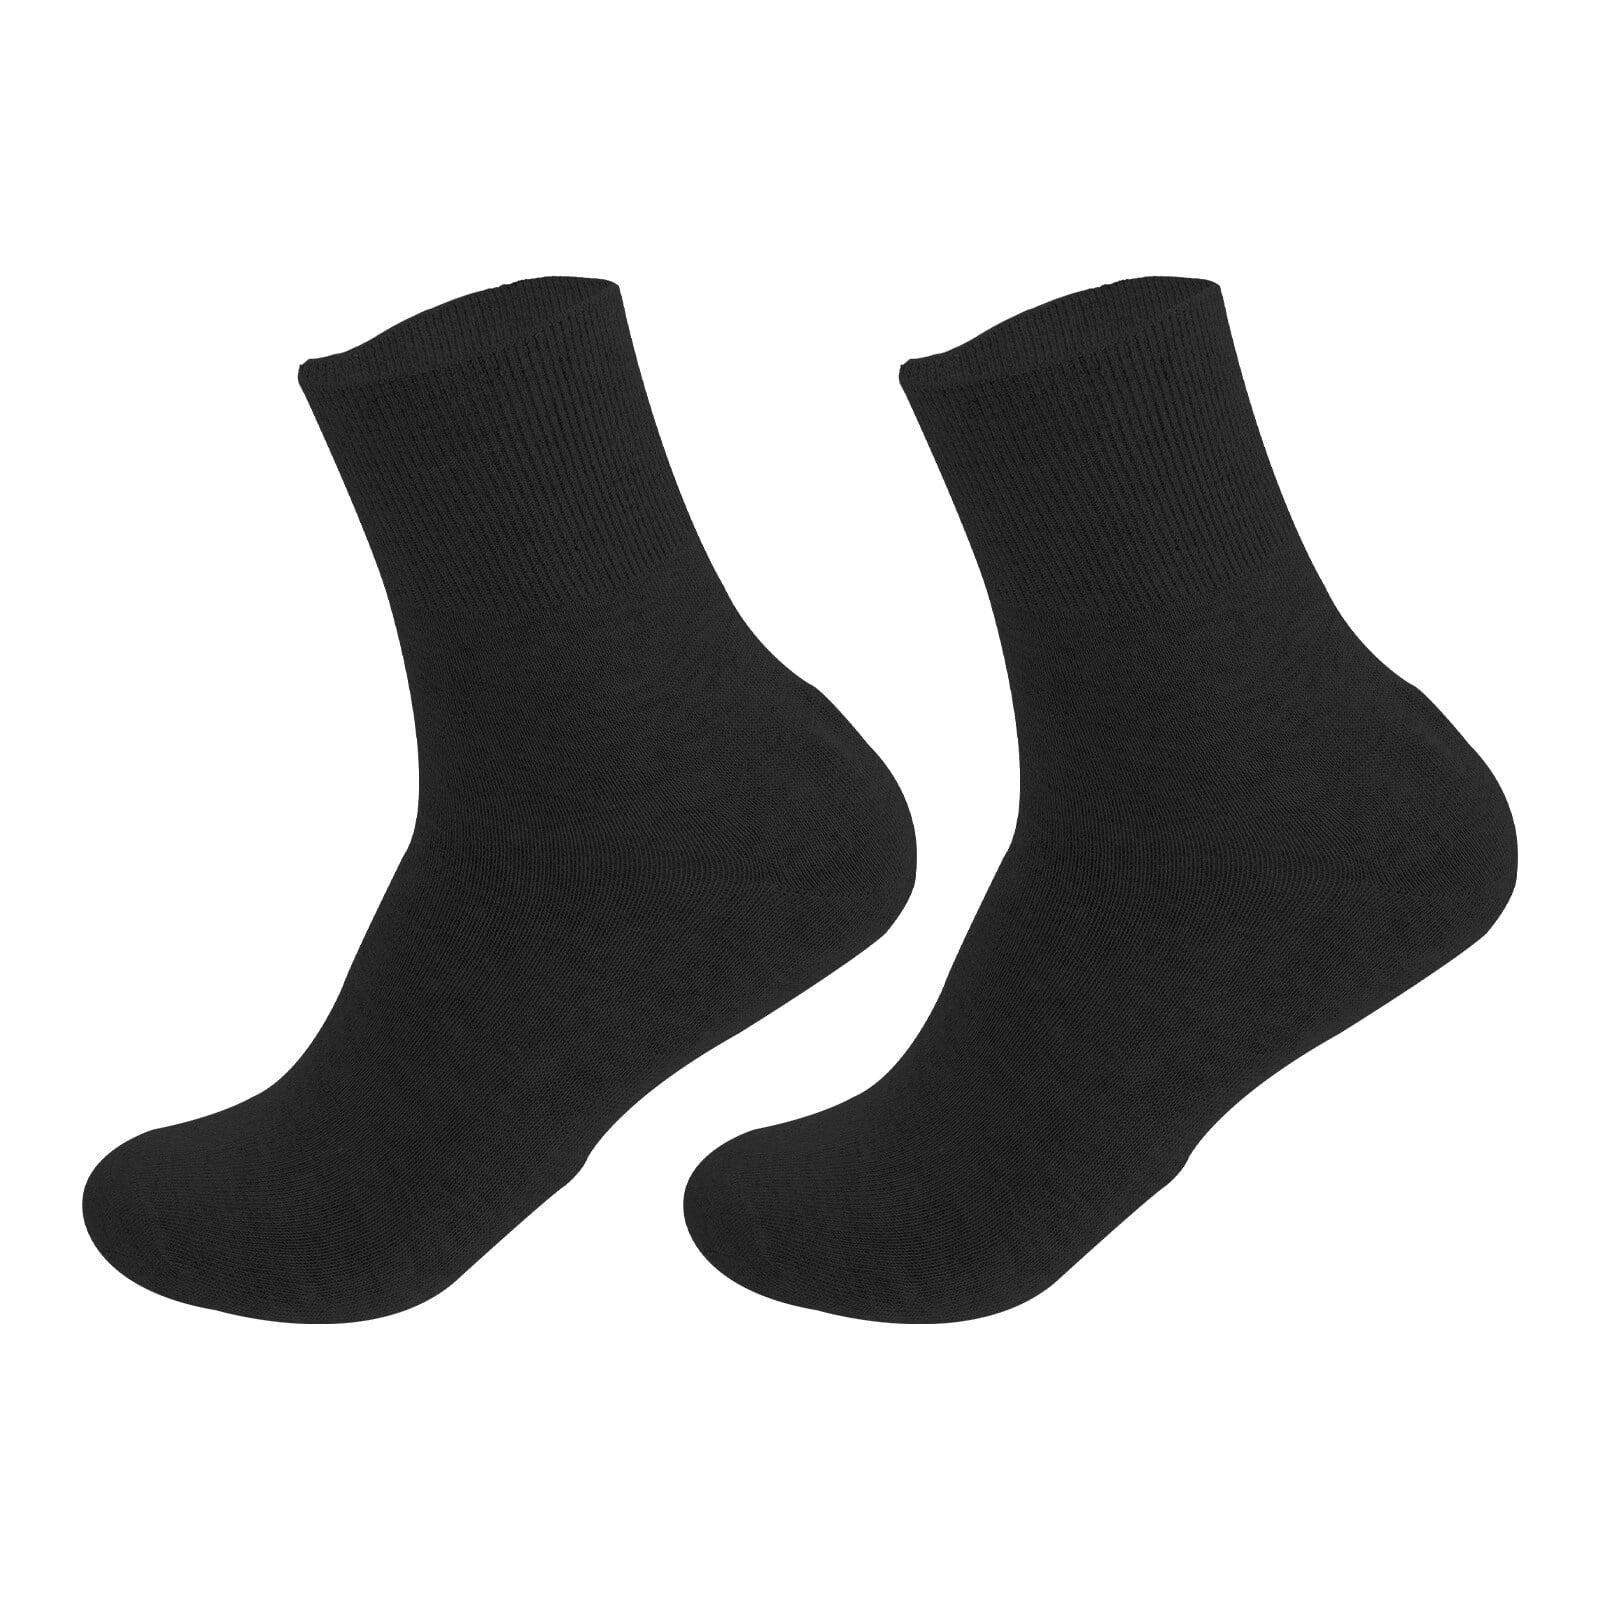 2pcs Men Moisturizing Socks Feet Care Treatment for Dry Cracked Rough ...